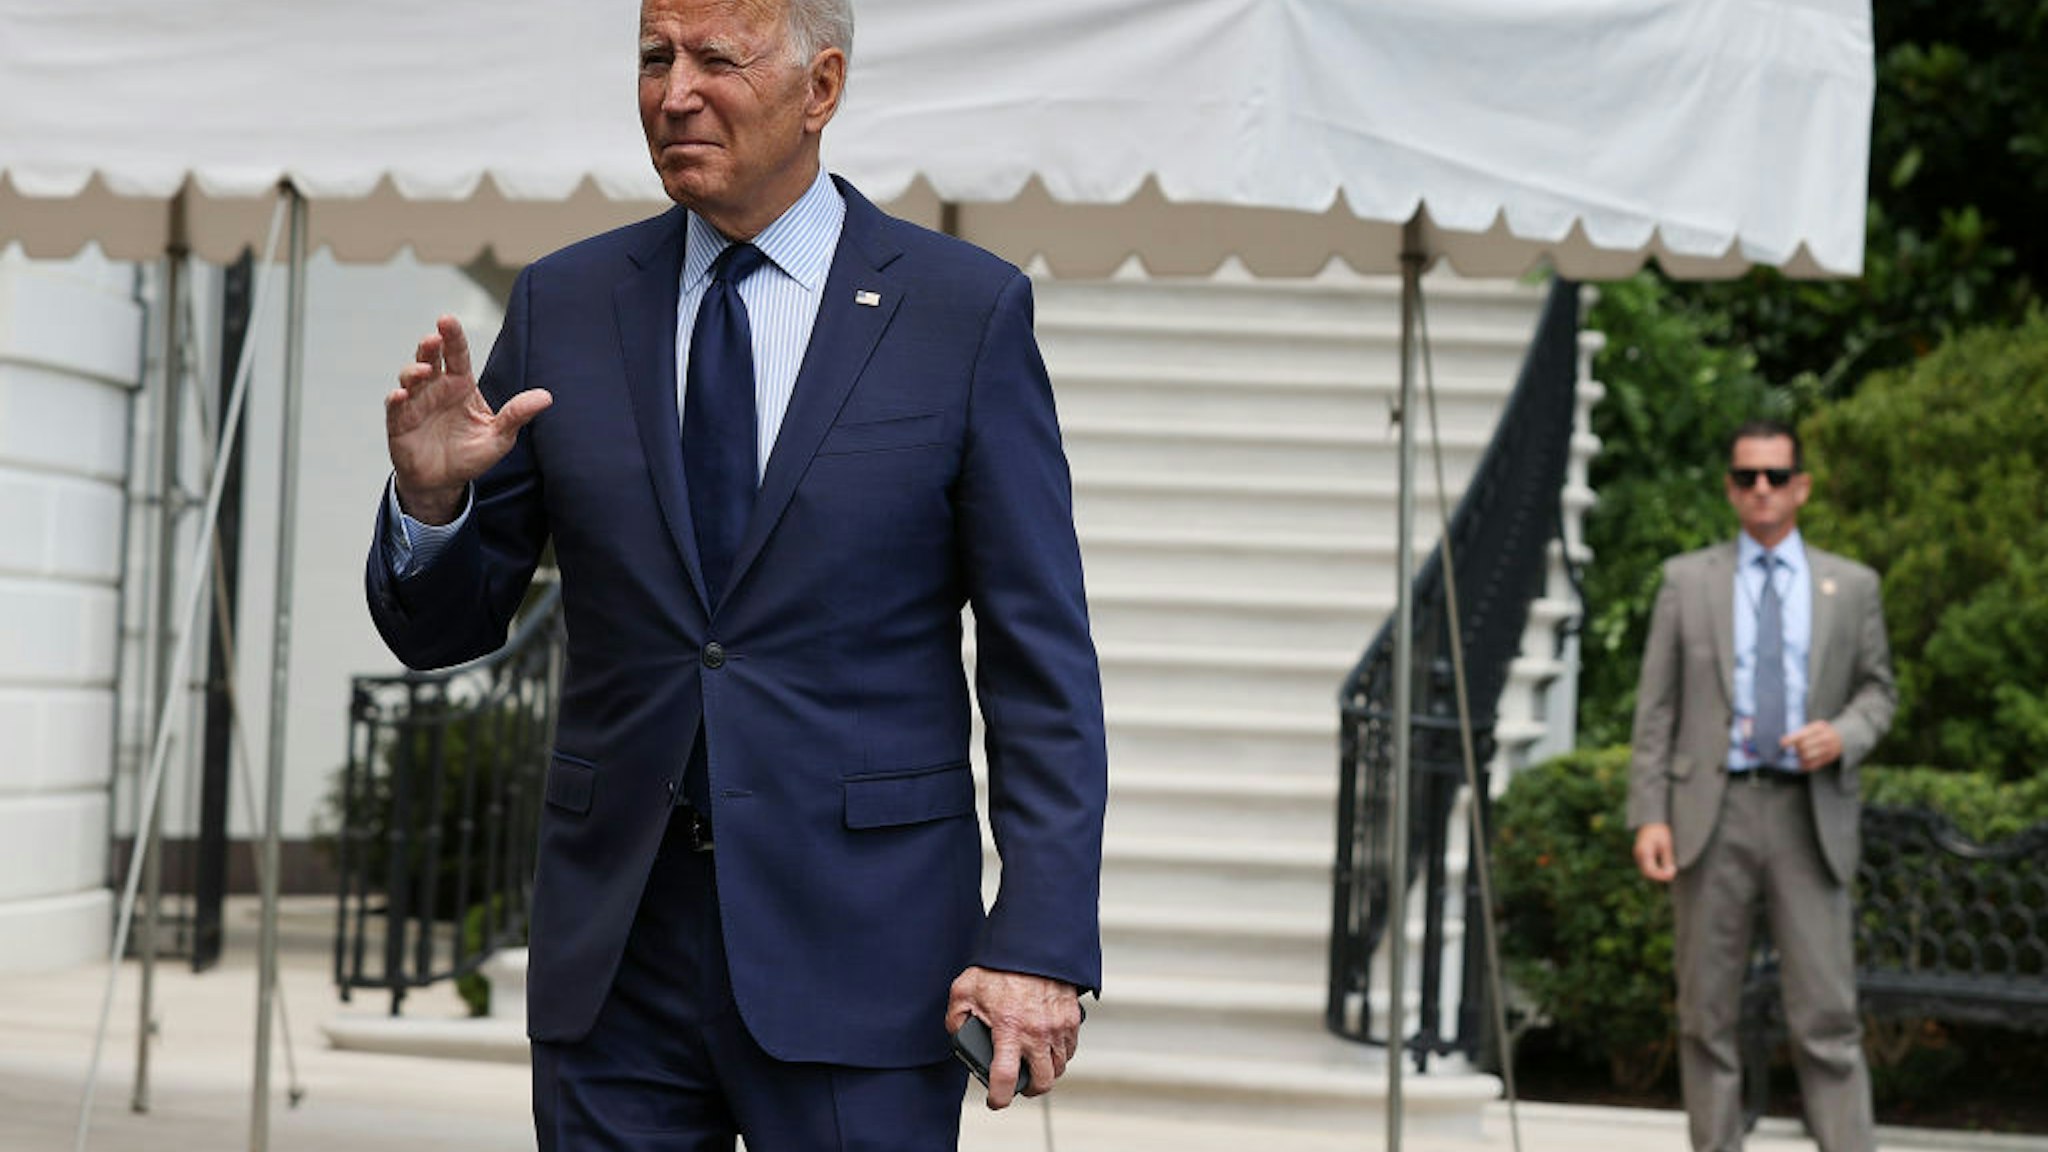 U.S. President Joe Biden departs the White House on July 16, 2021 in Washington, DC. Biden is spending the weekend at Camp David.